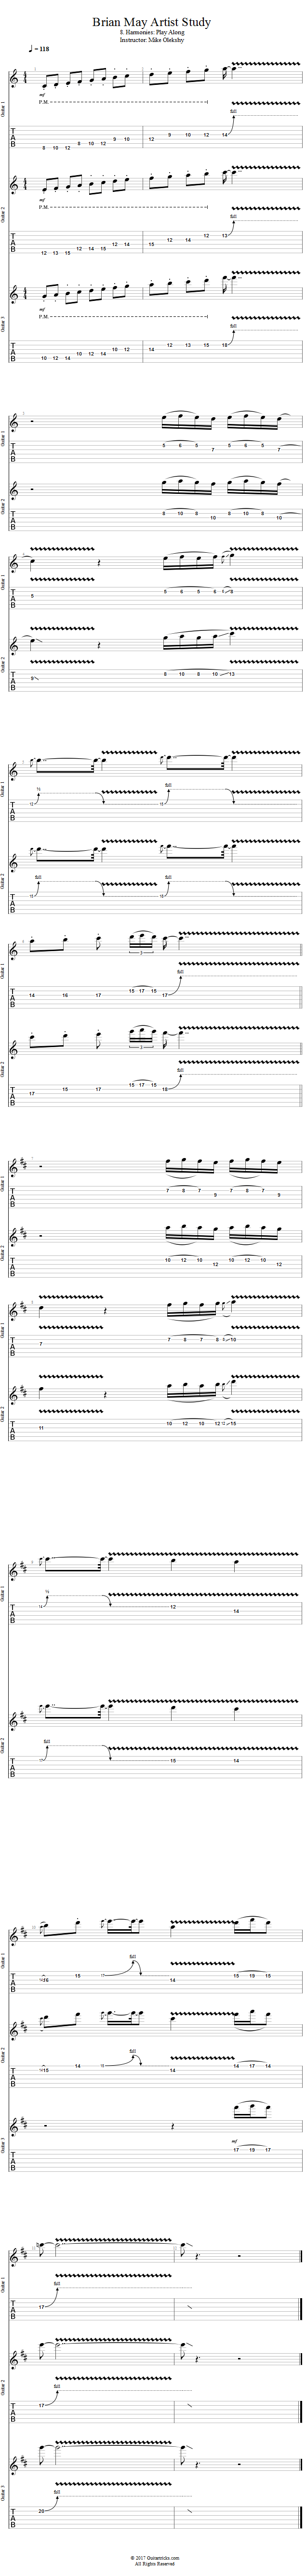 Harmonies: Play Along song notation